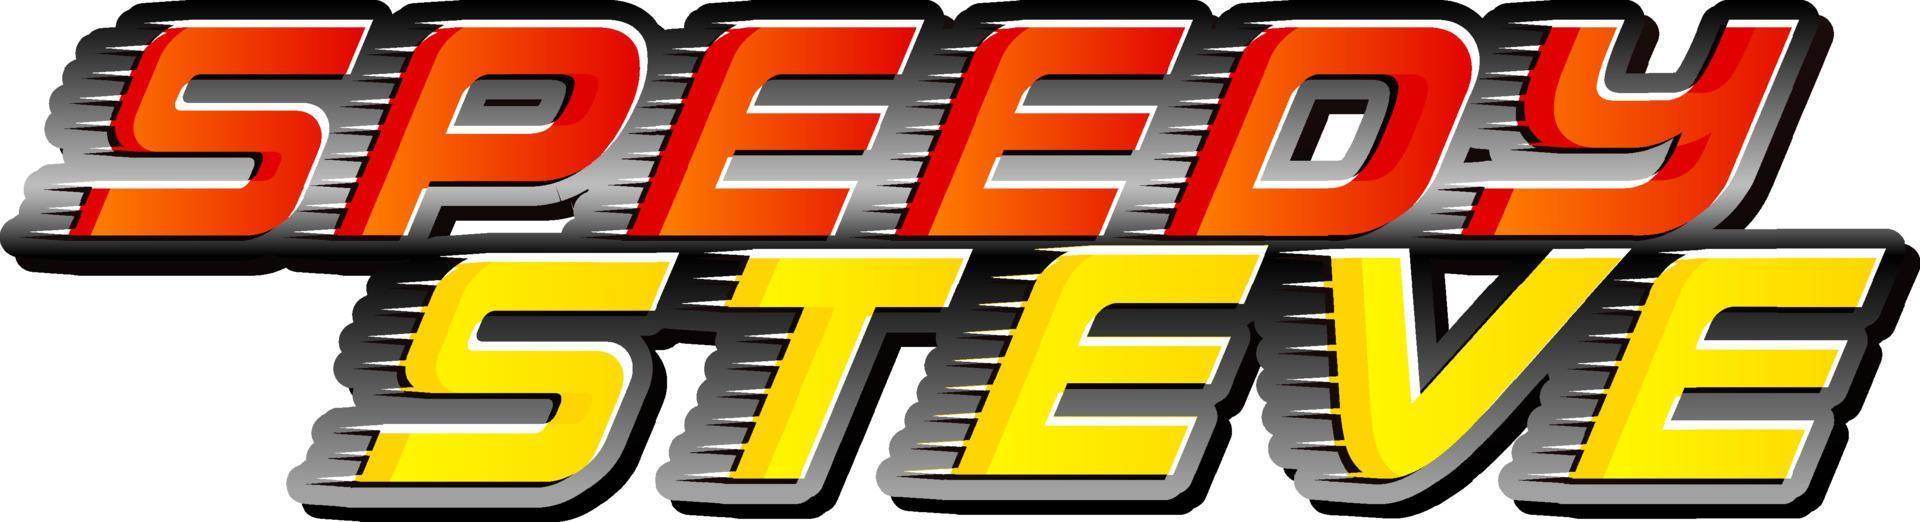 Speedy Steve logo text design vector